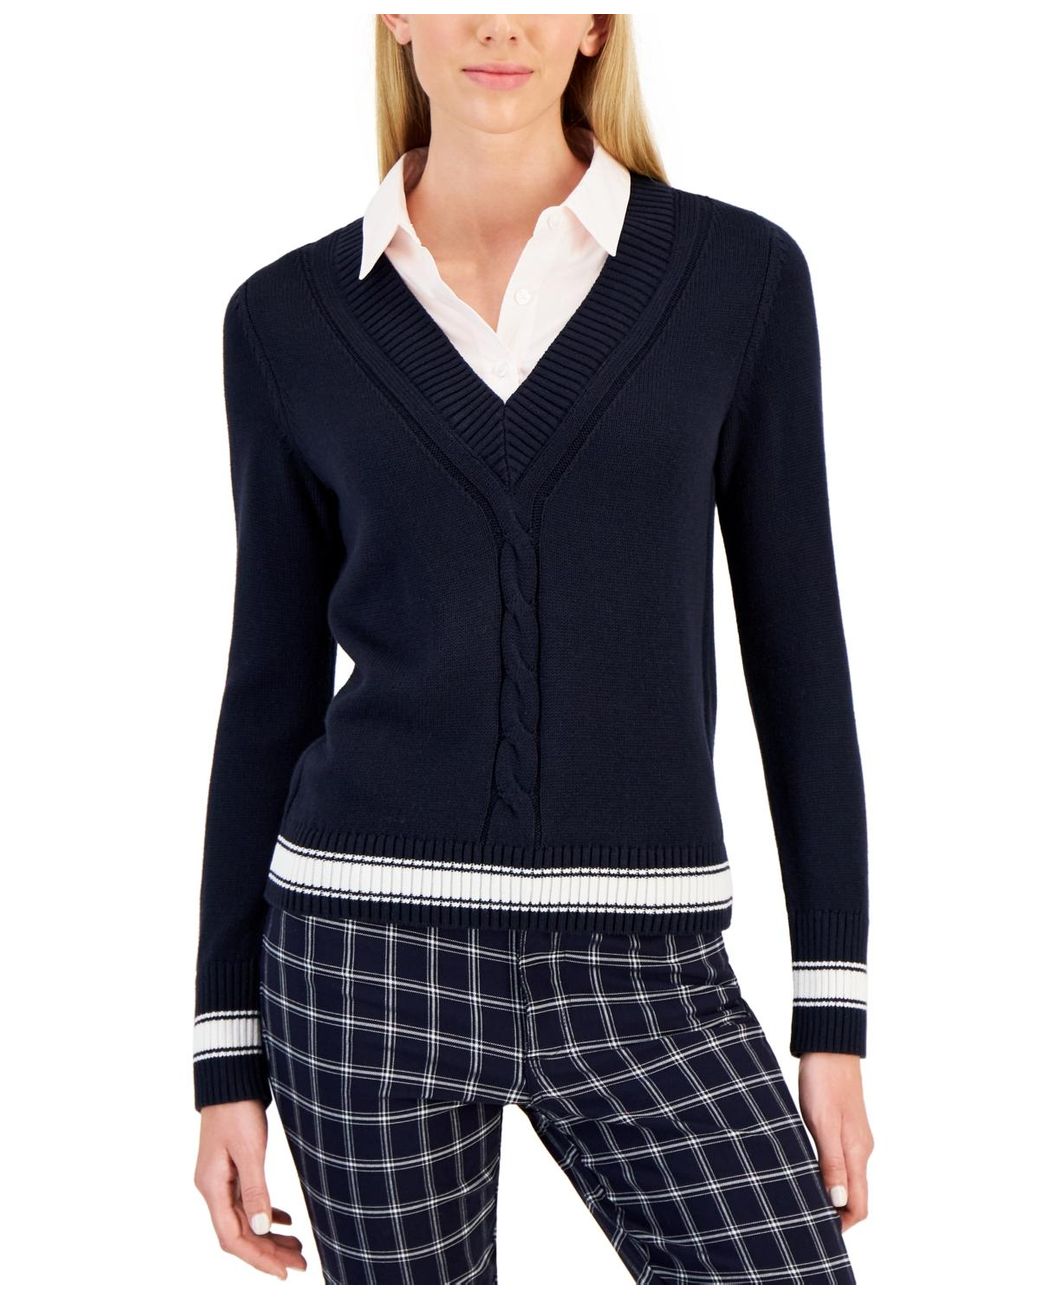 Cotton V-Neck Pullover Varsity Sweater Navy Blue With White Trim